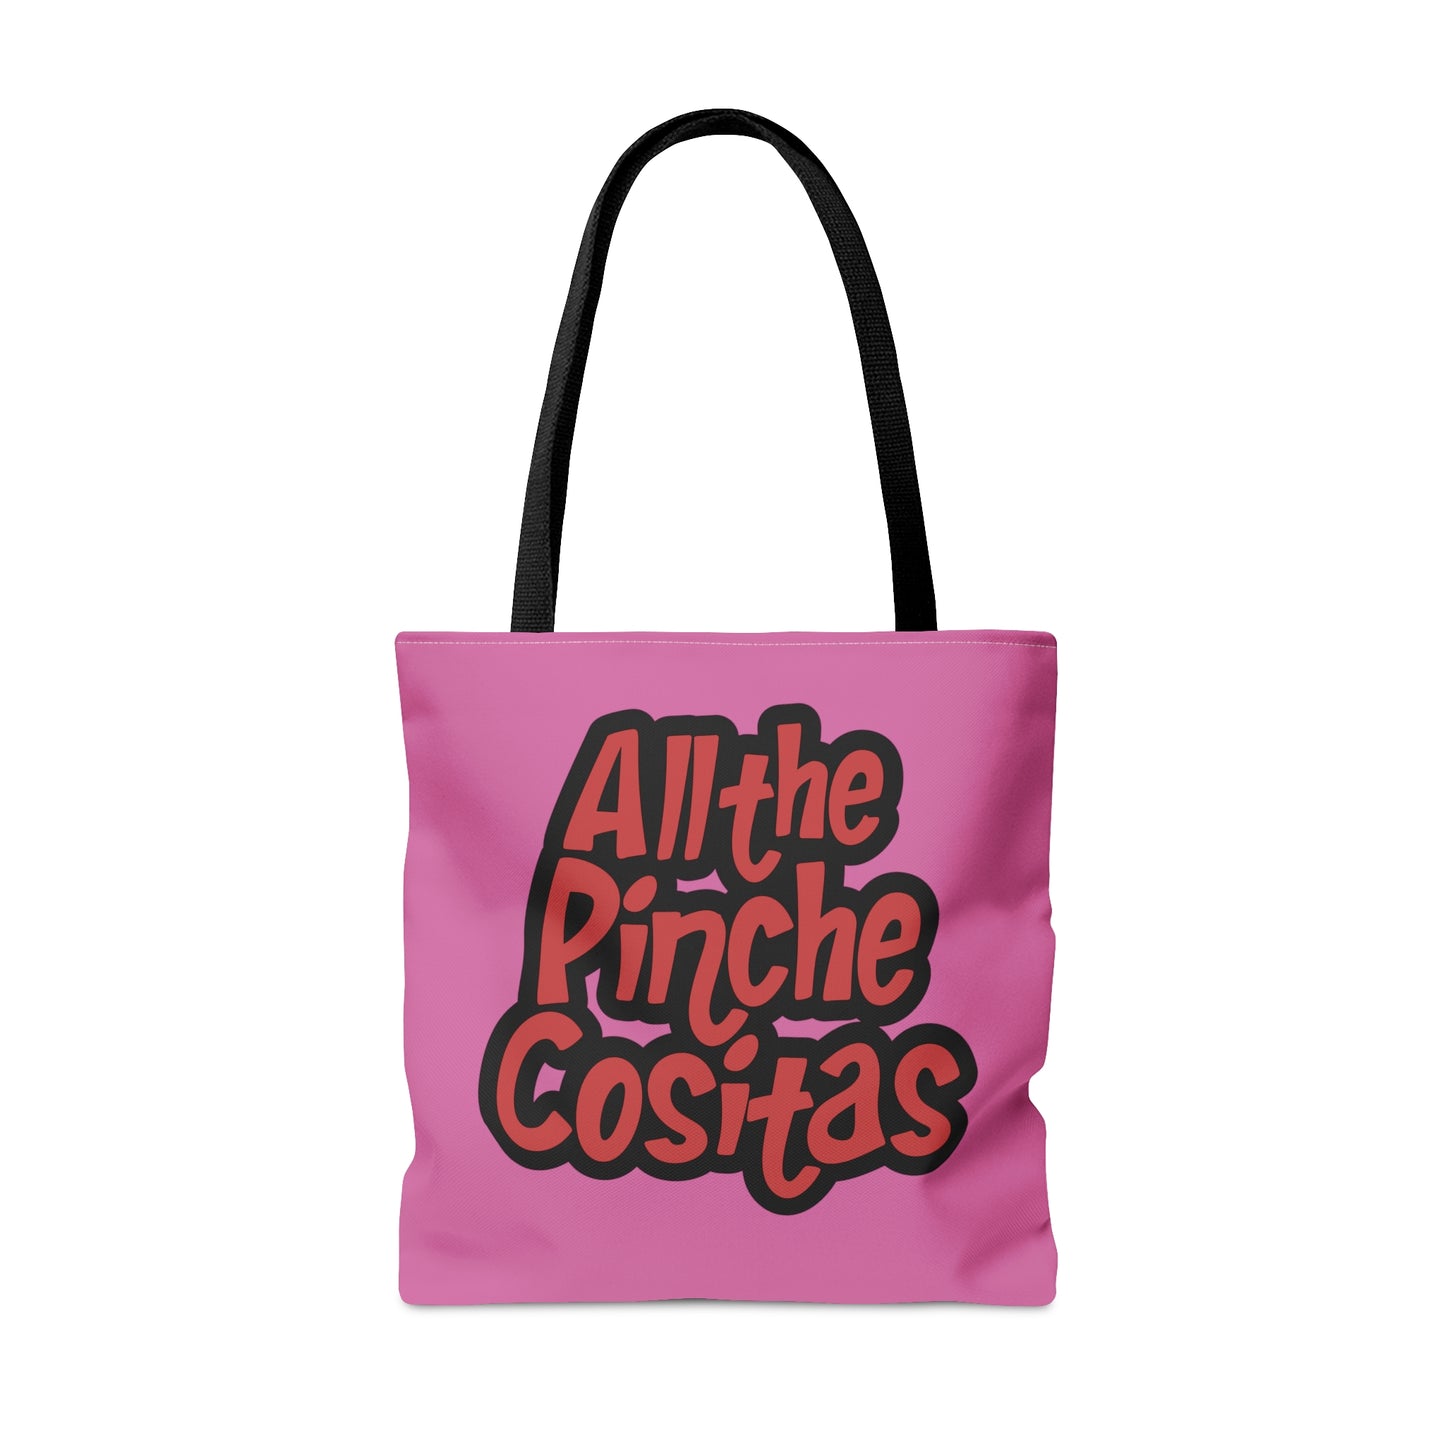 All The Pinche Cositas Tote Bag